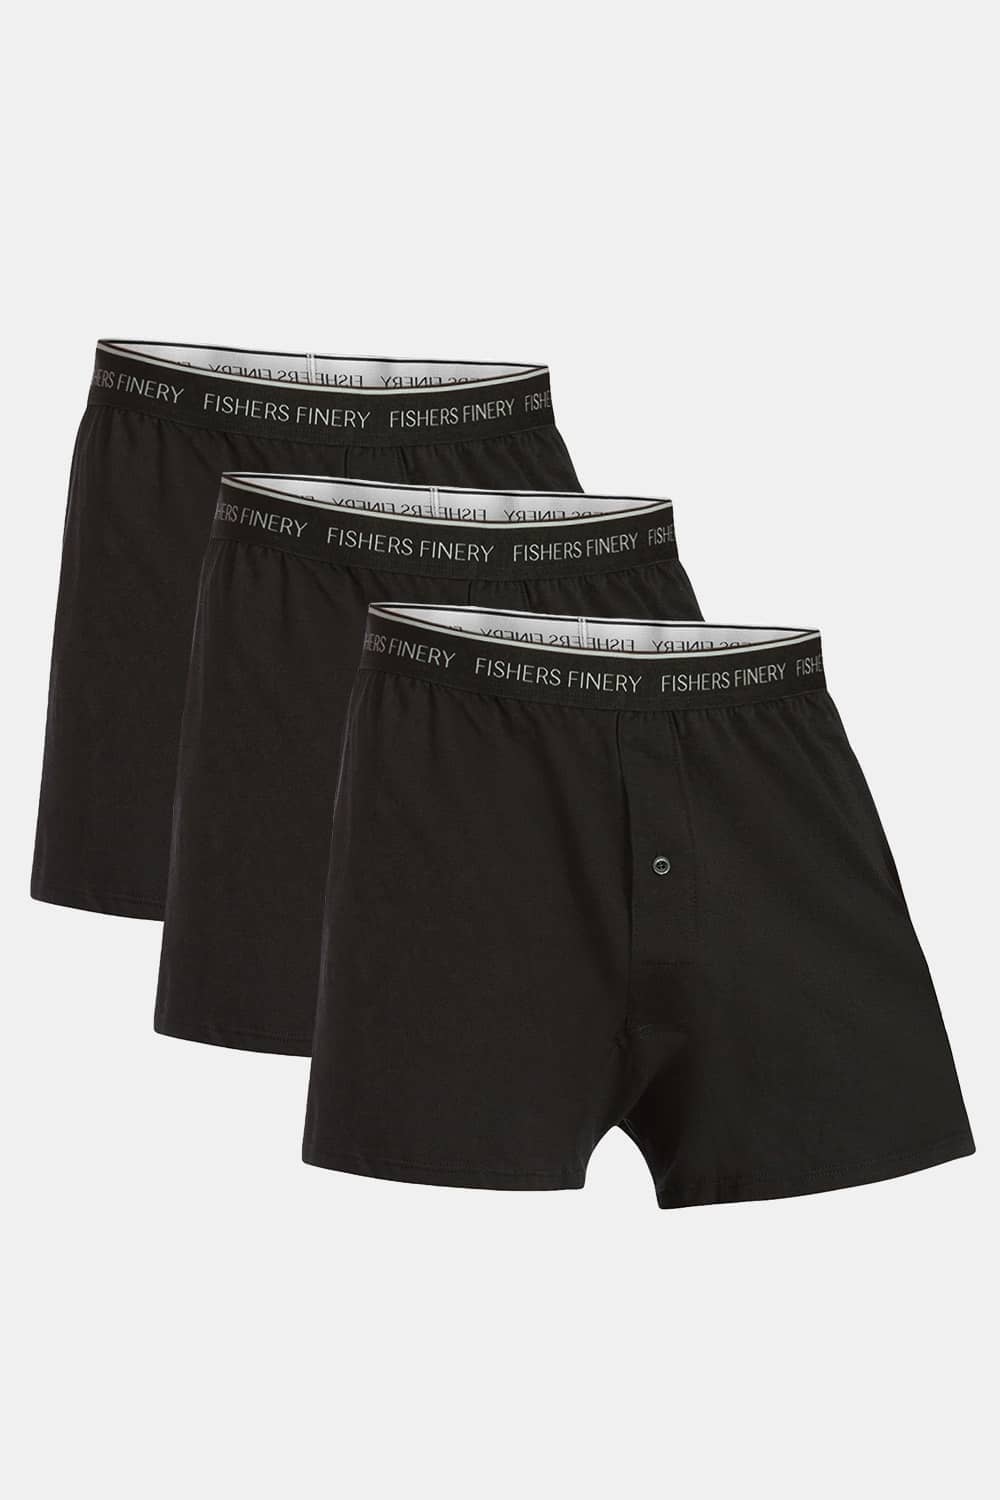 Men's Cotton-Rich Fitness Boxer Shorts 500 (3-pack) - Black/Grey/Navy